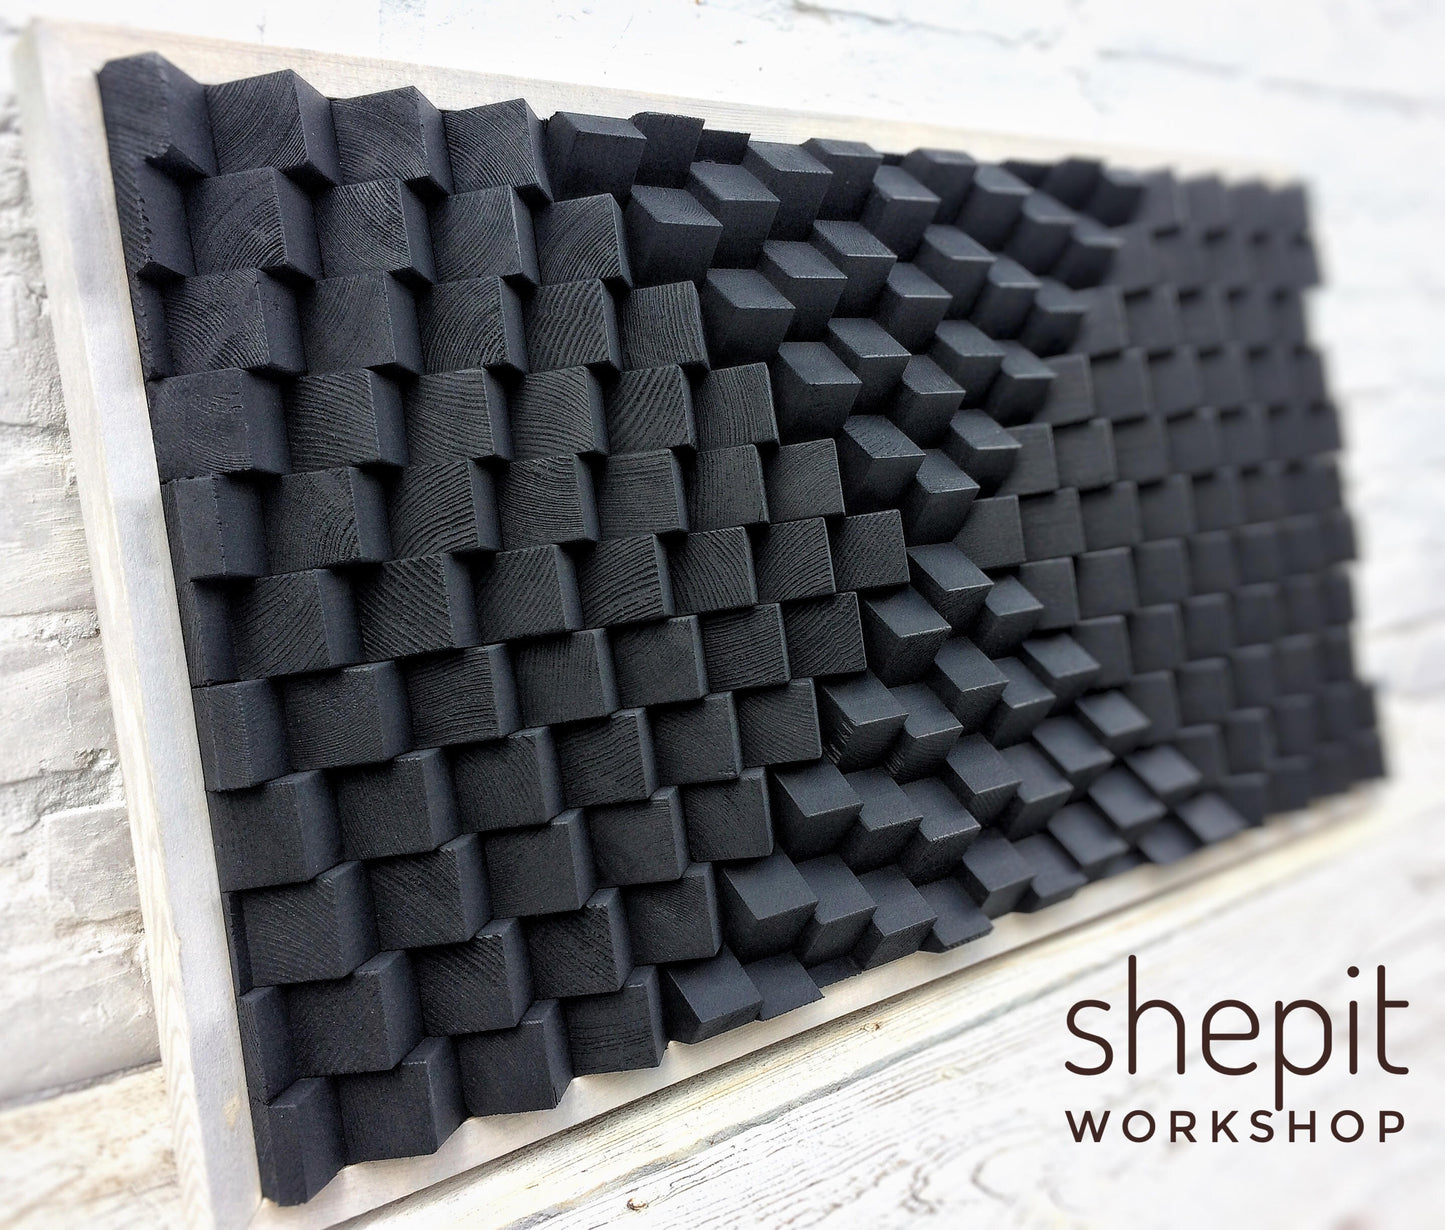 Acoustic Panel - Black Sound Diffuser - Wood Wall Art - 3D Geometric